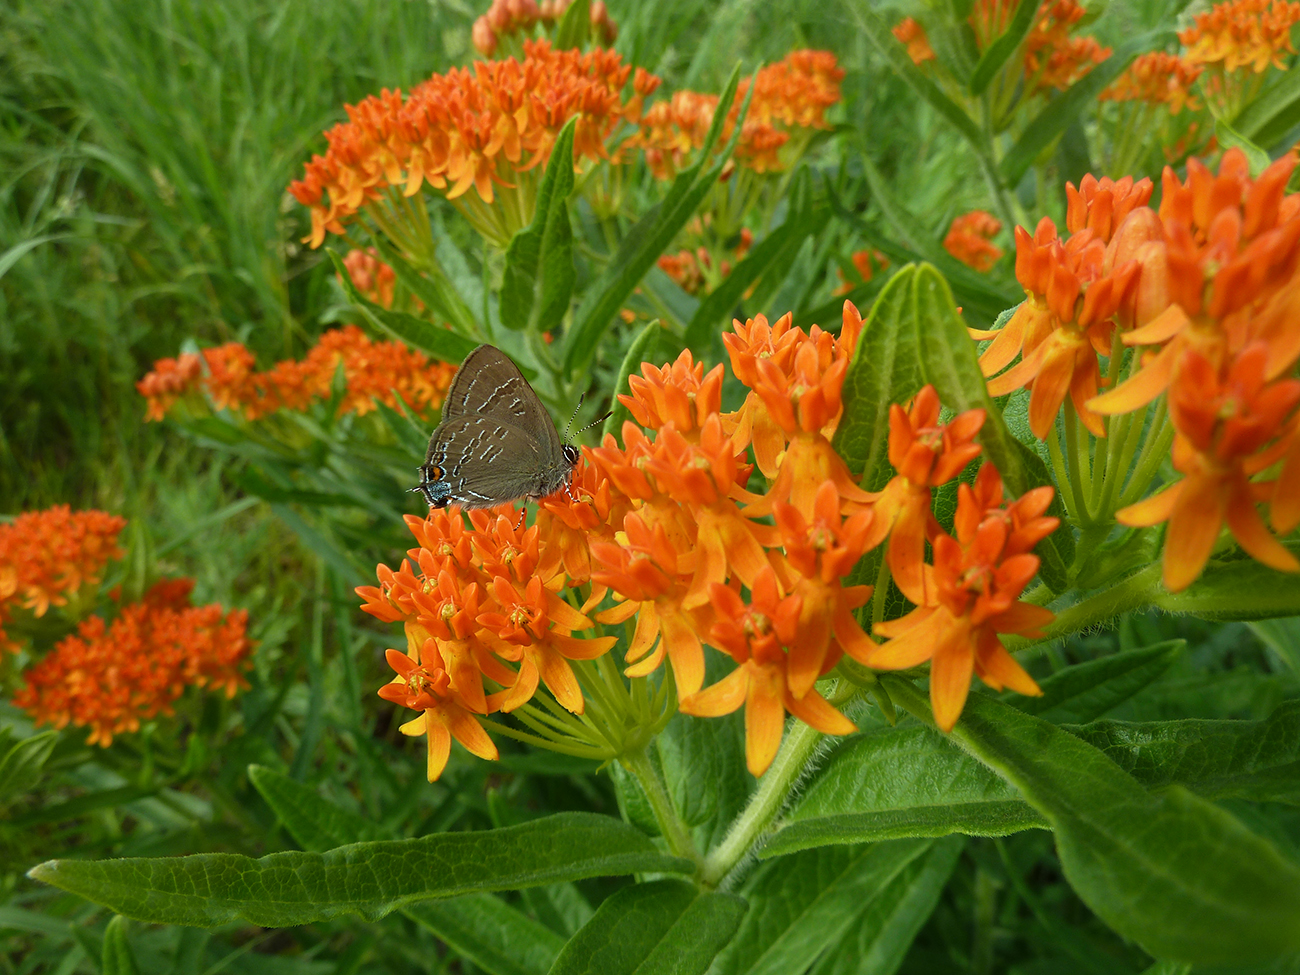 Butterfly drinks nectar from an orange flower